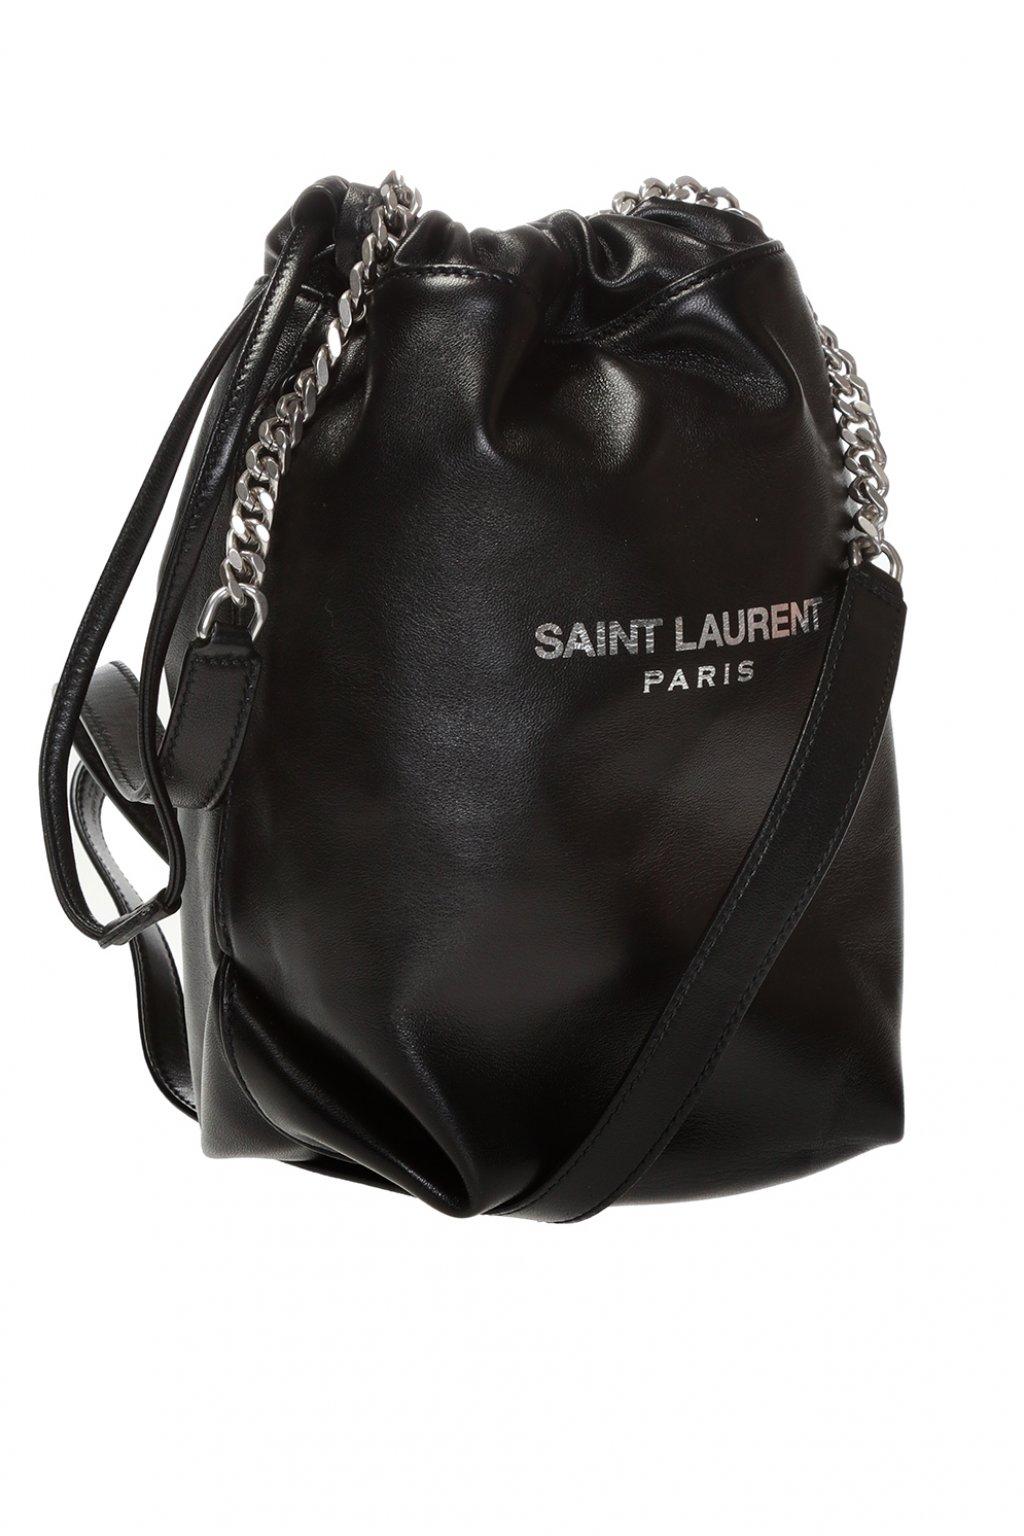 Saint Laurent Leather 'teddy' Bucket Bag in Black - Lyst